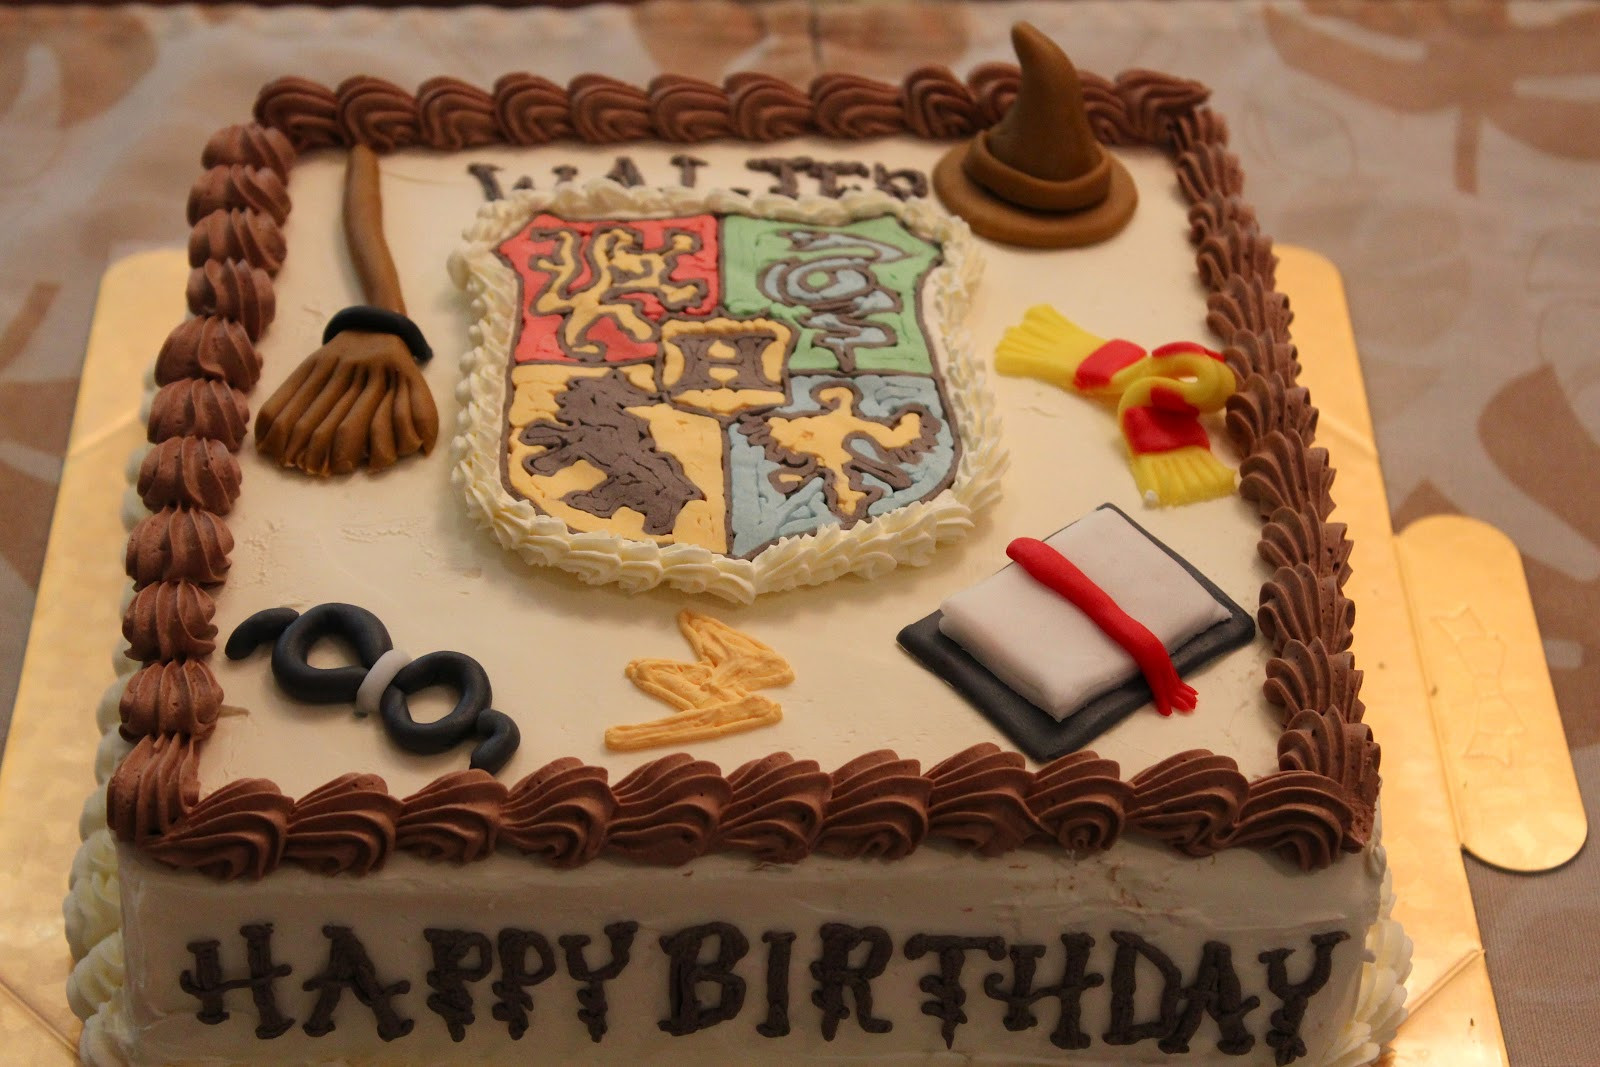 Harry Potter Birthday Cakes
 Tortelicious Harry Potter Cake